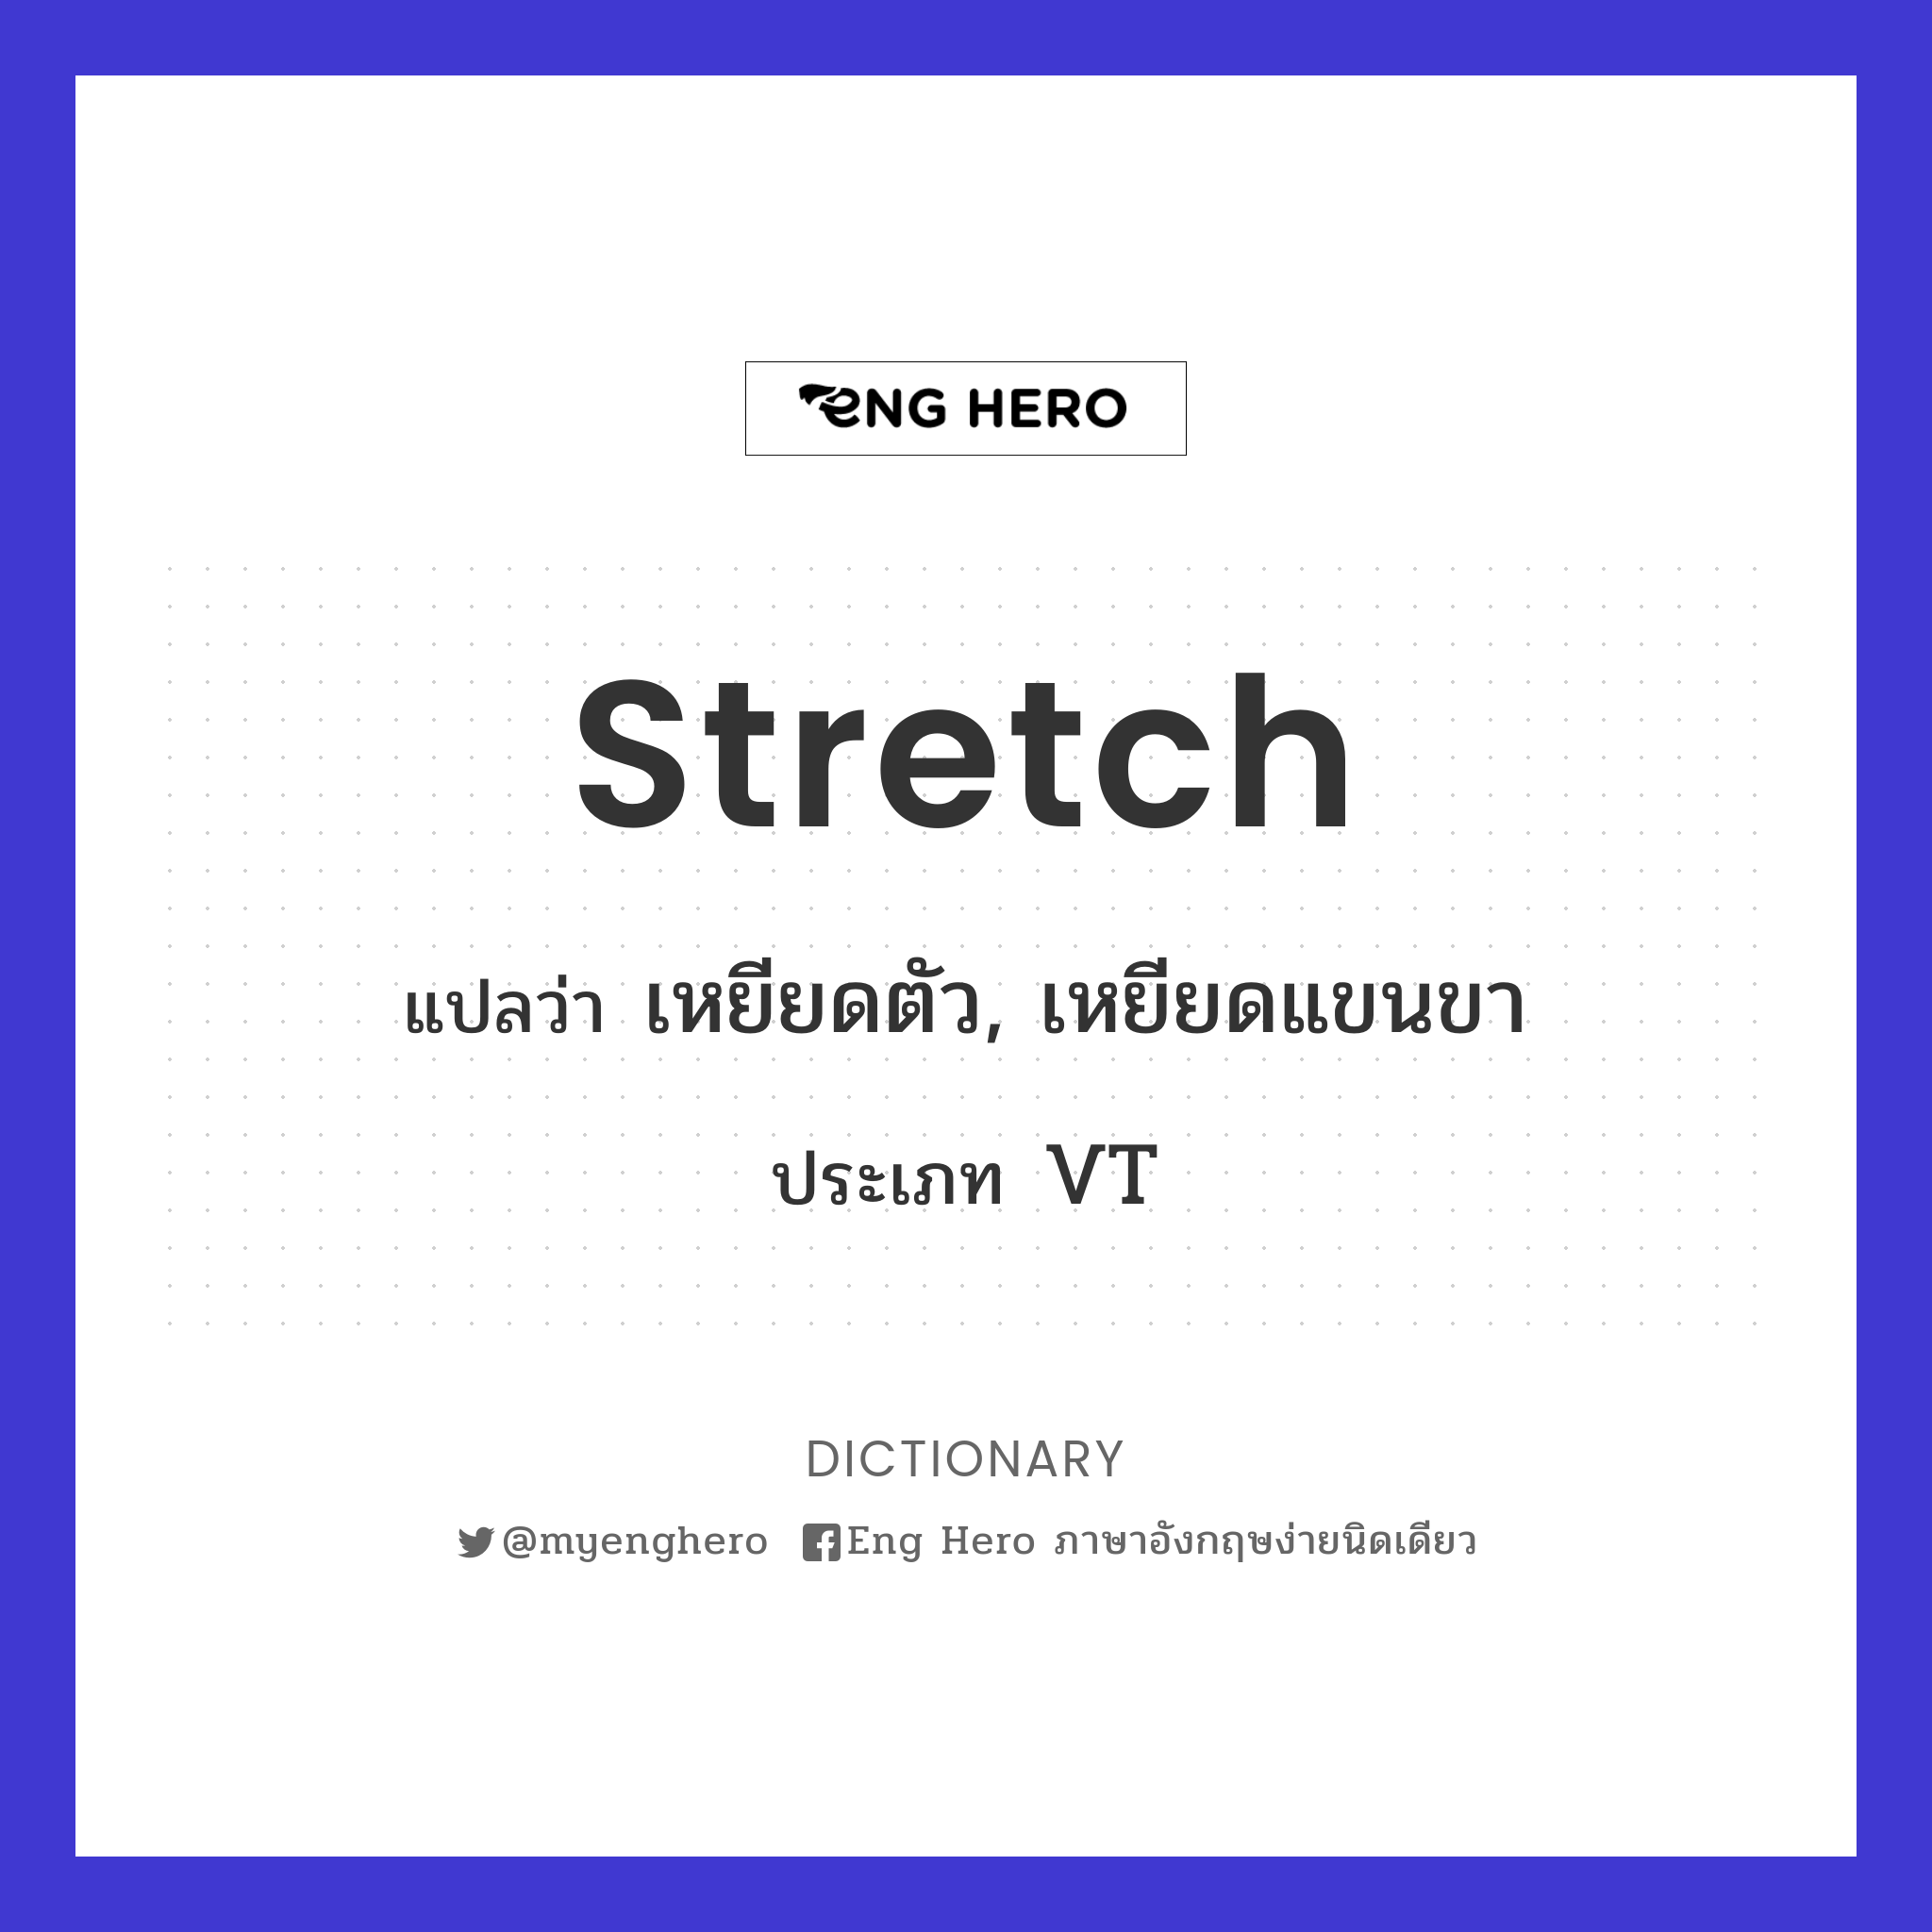 stretch